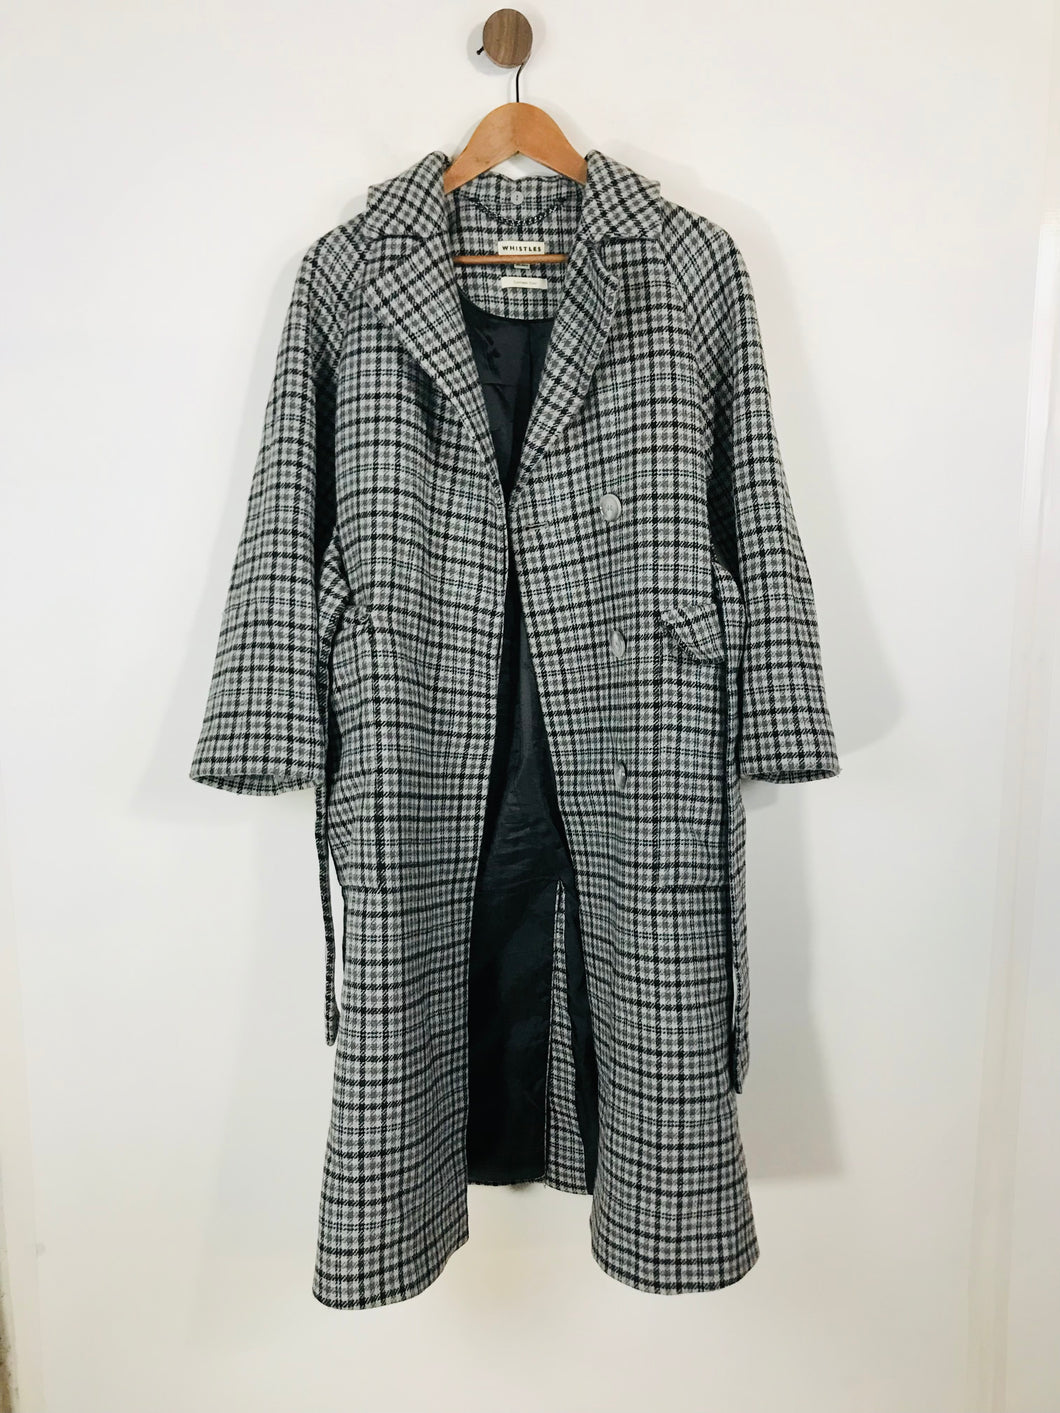 Whistles Women's Check Smart Overcoat Coat | XS UK6-8 | Multicoloured